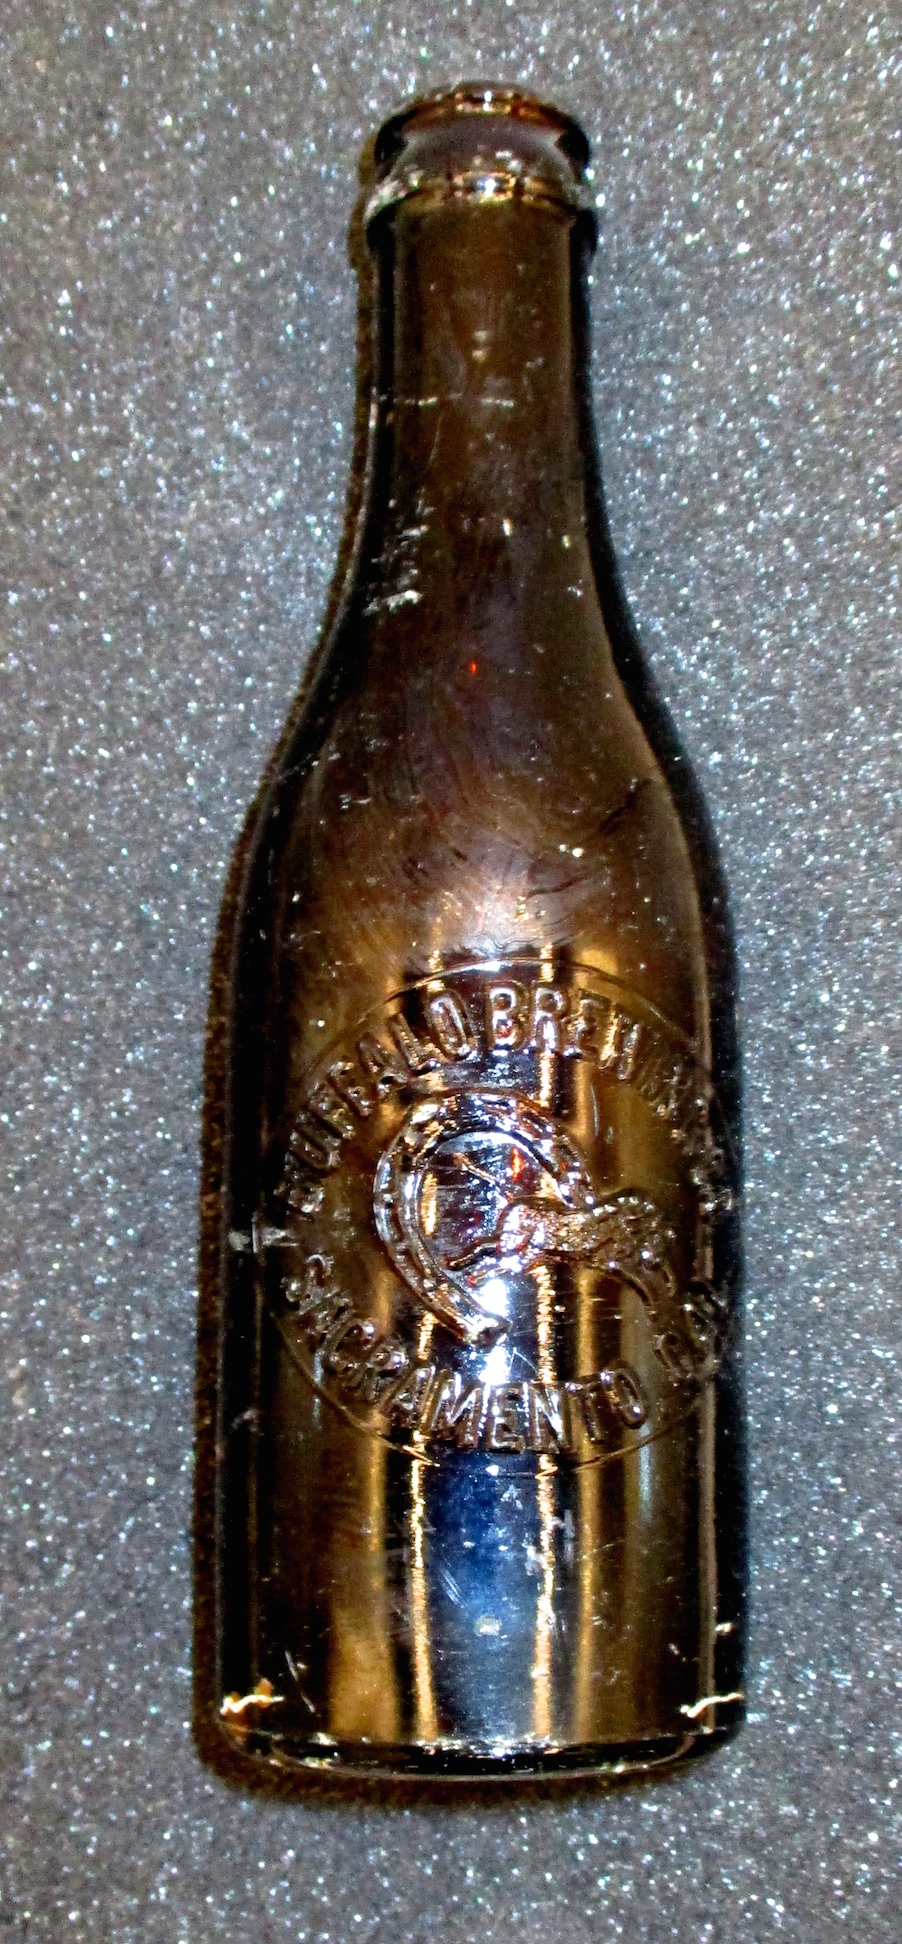 Early Buffalo Brewery (Sacramento) Beer Bottle 